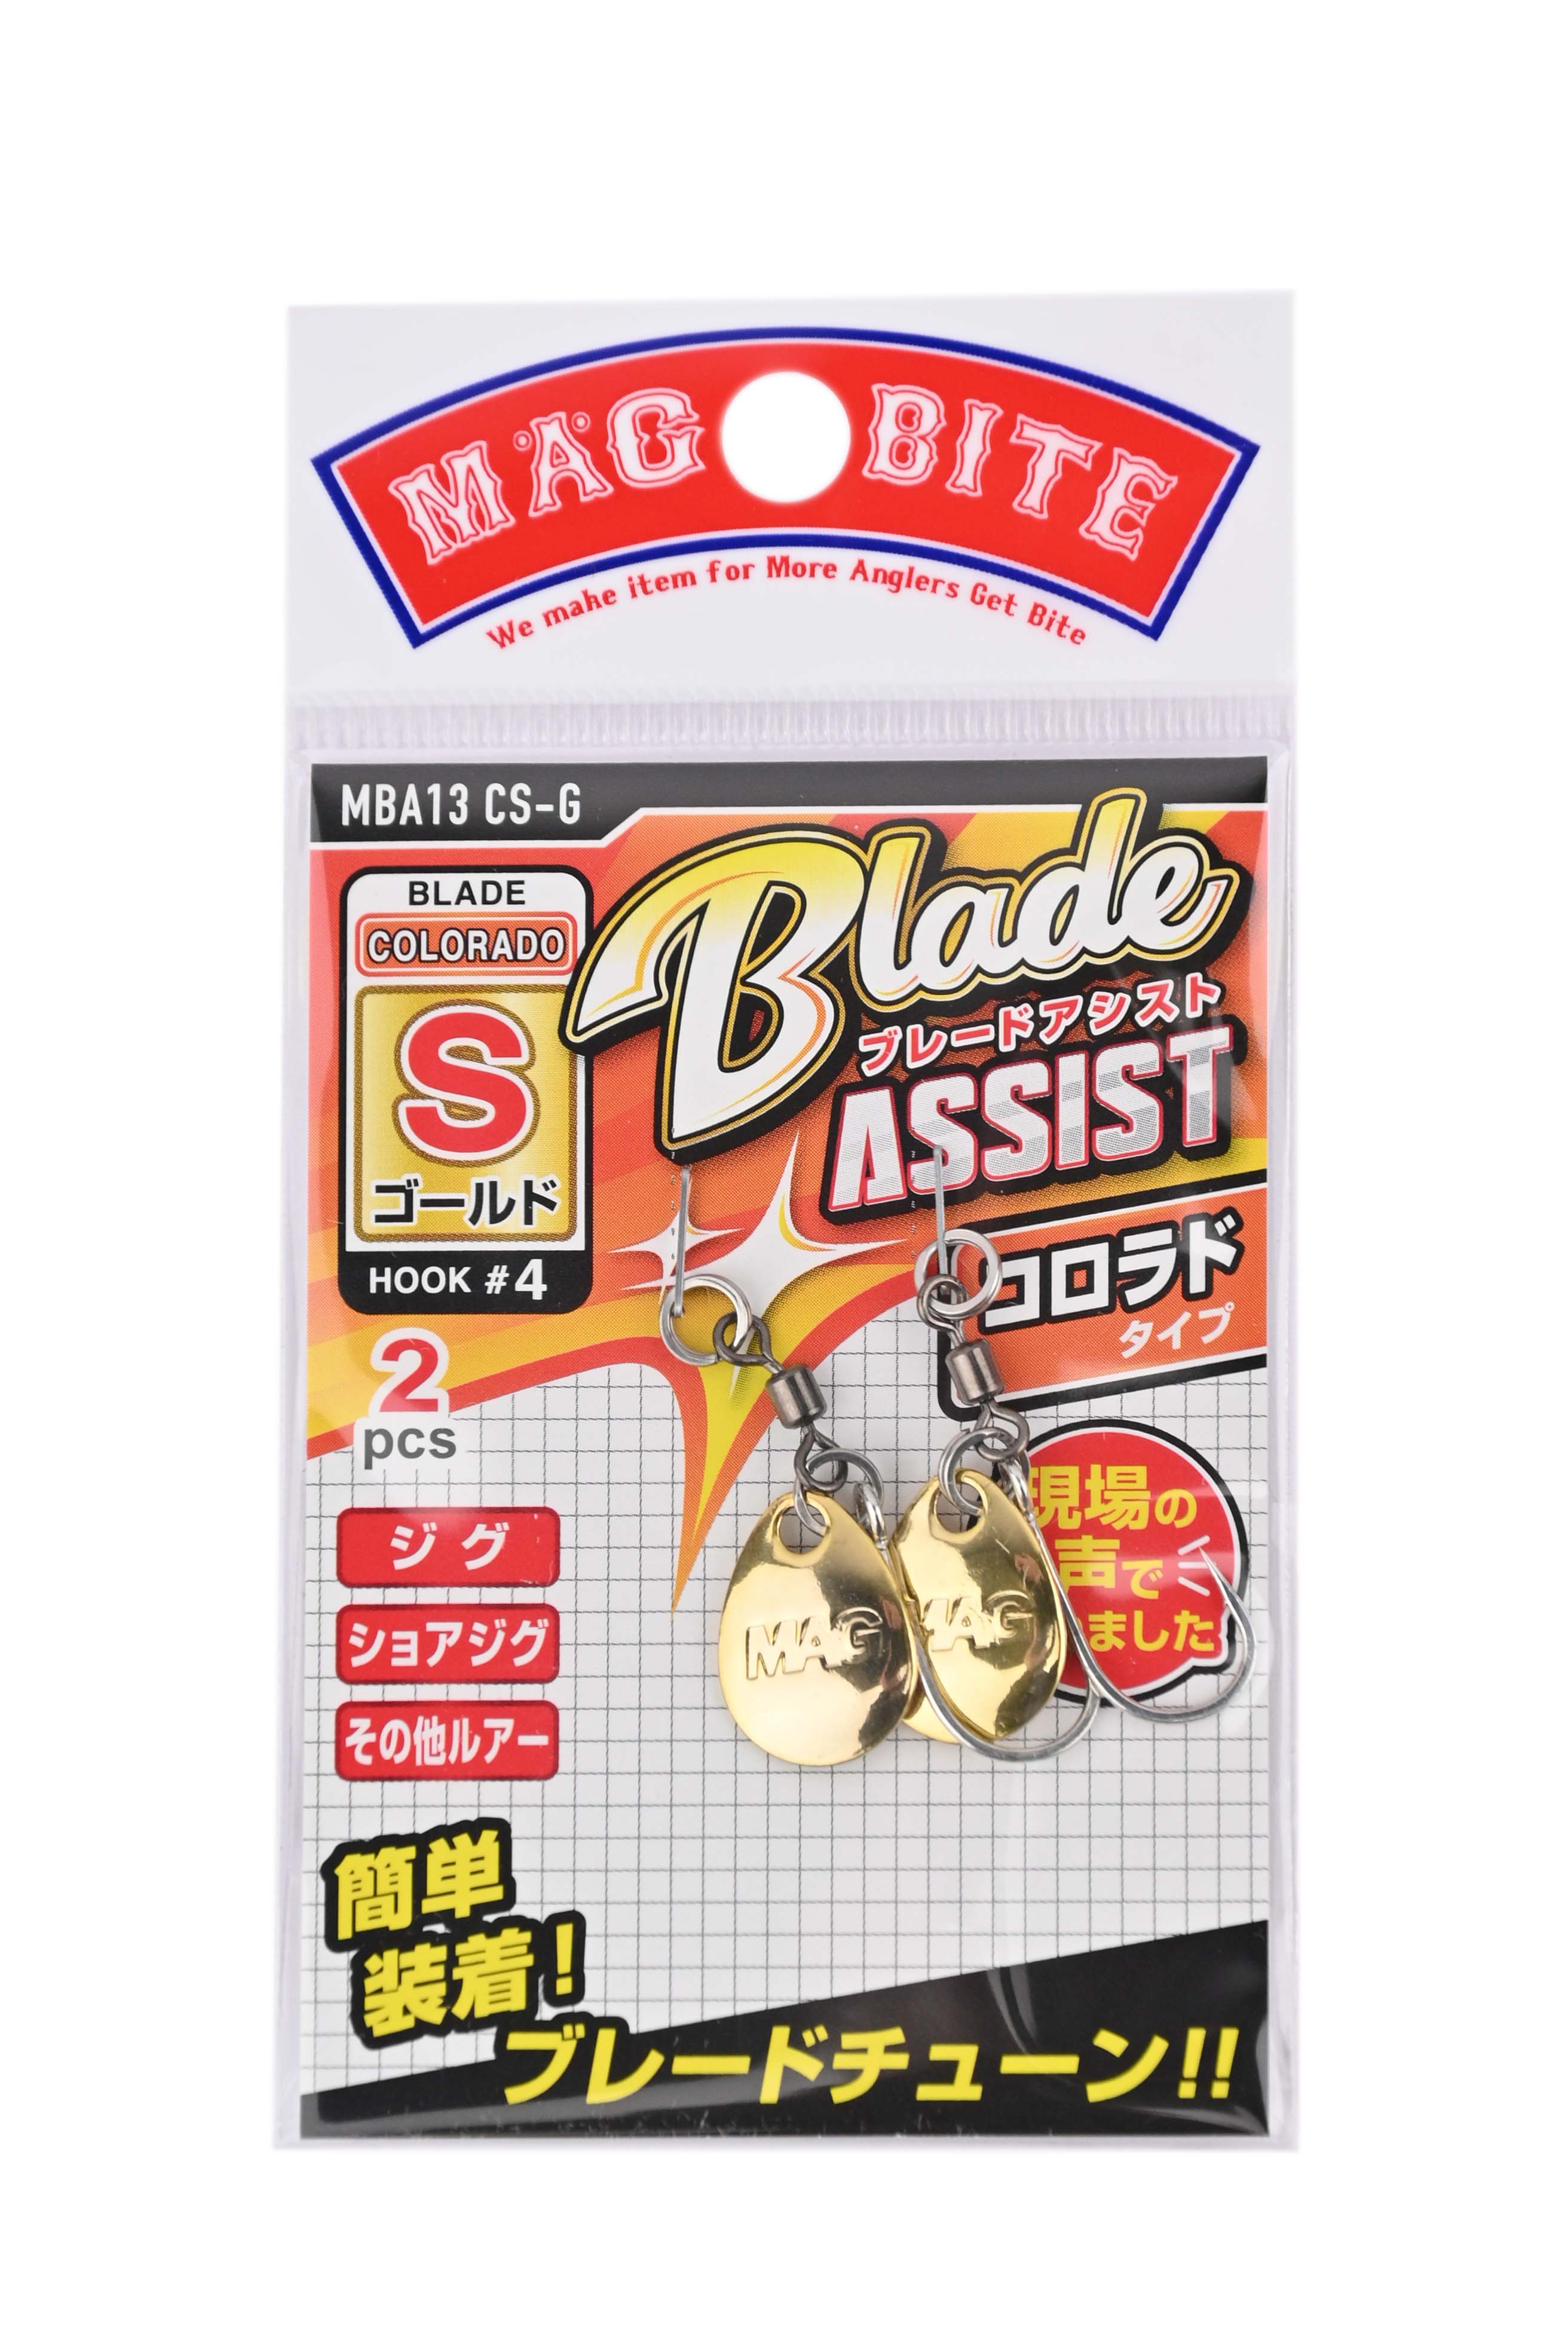 Крючки Magbite MBA13 Blade Assist S colorado gold - фото 1